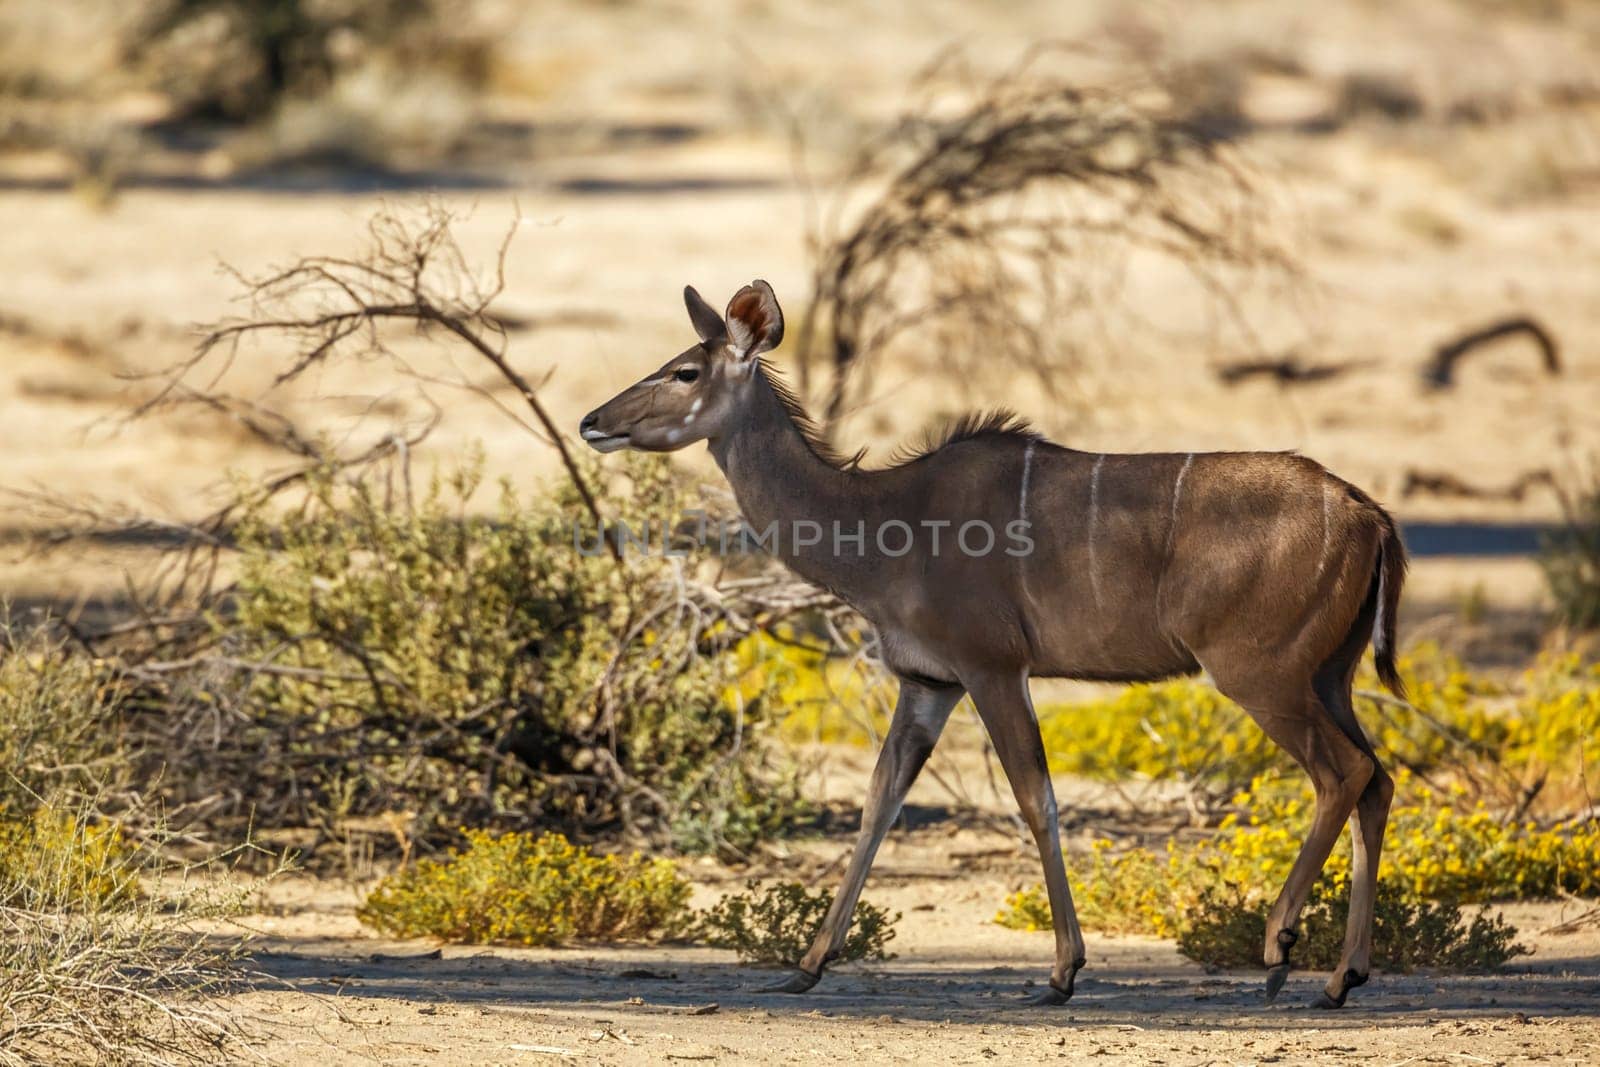 Greater kudu female walking in dry land in Kgalagadi transfrontier park, South Africa ; Specie Tragelaphus strepsiceros family of Bovidae